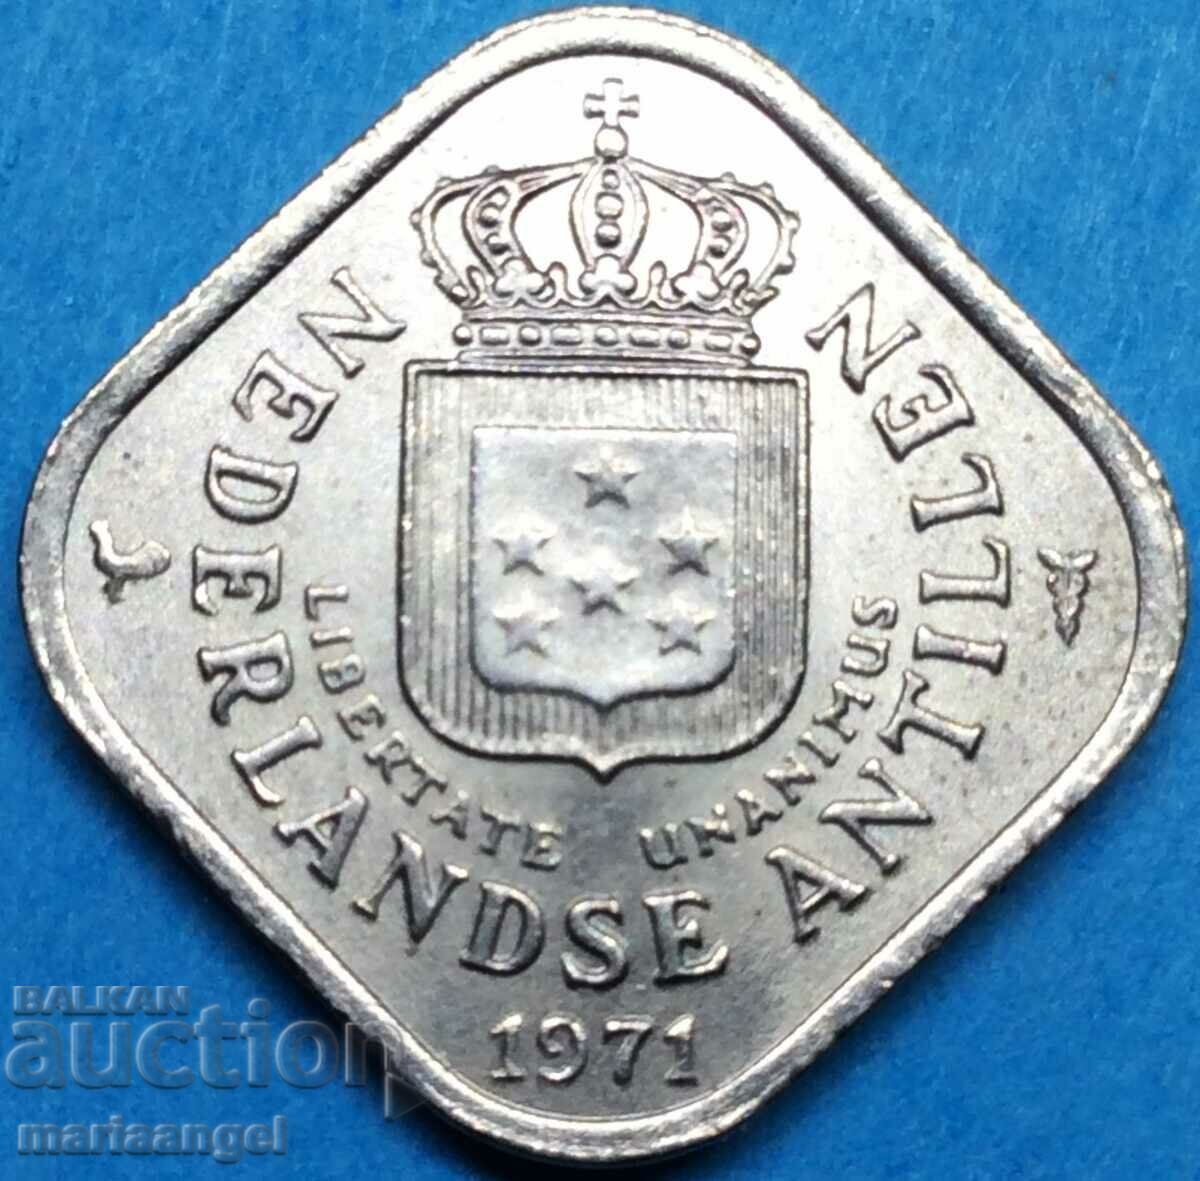 5 cents 1971 Netherlands Antilles